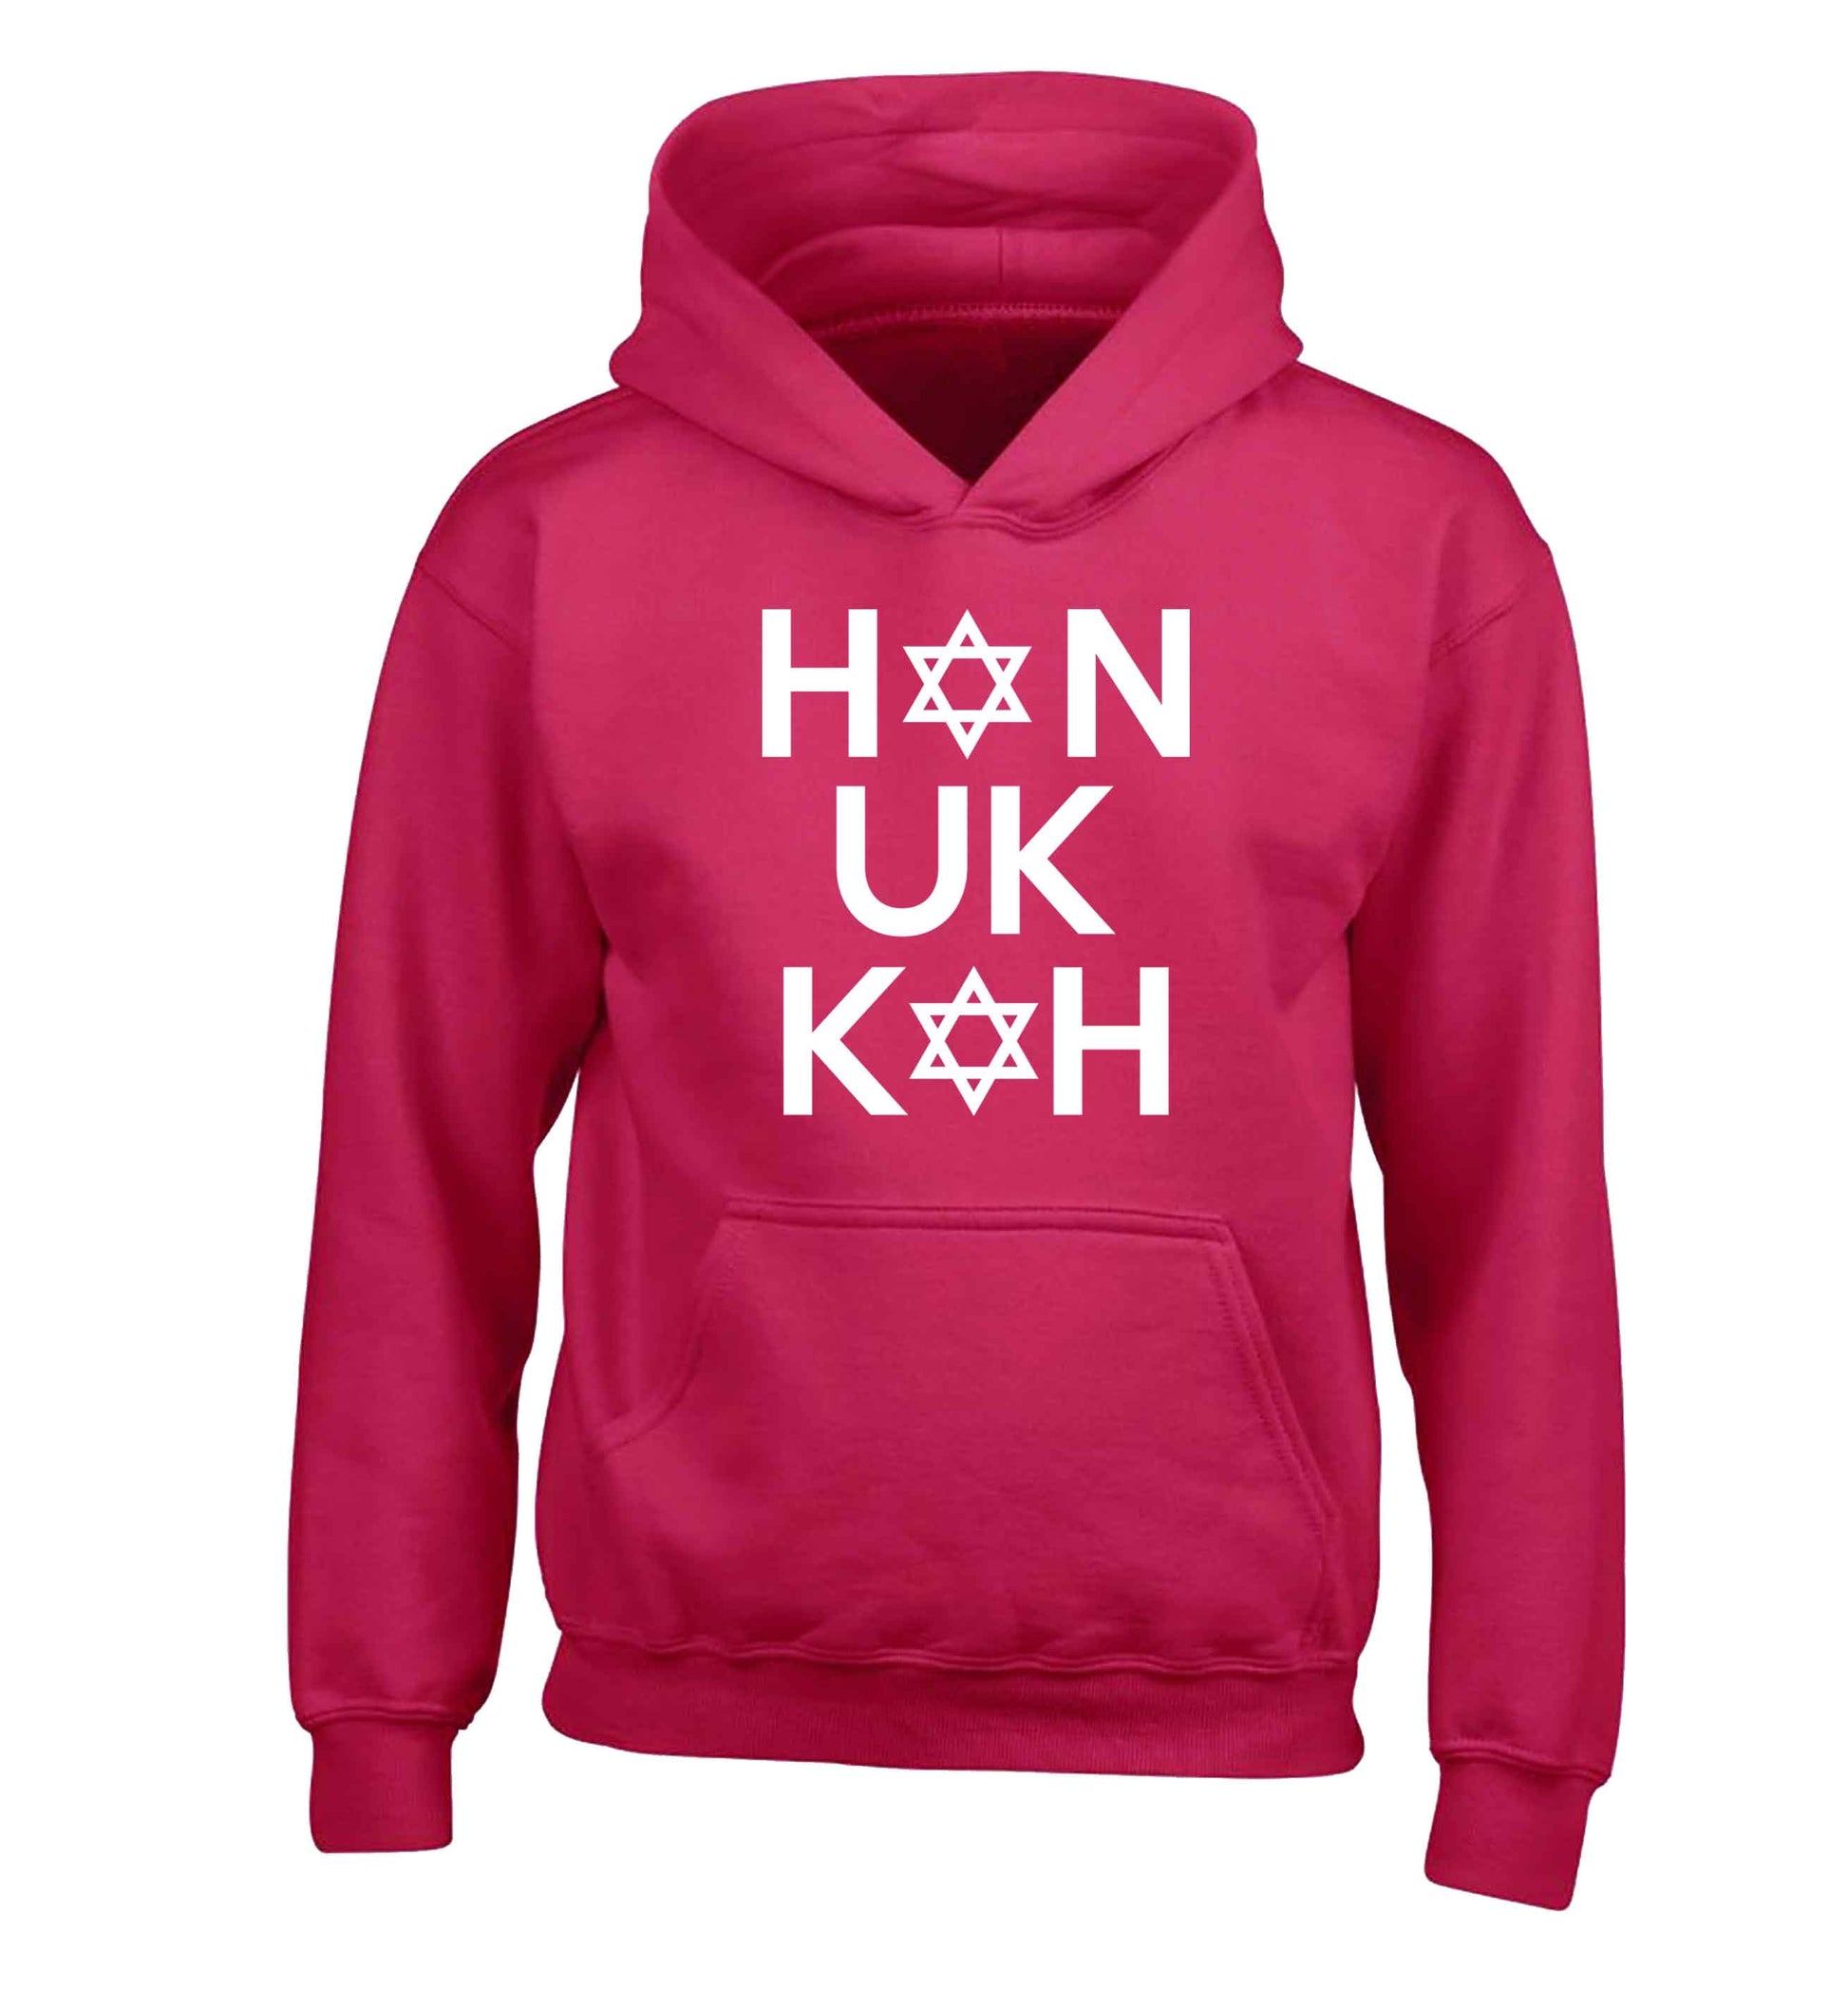 Han uk kah  Hanukkah star of david children's pink hoodie 12-13 Years